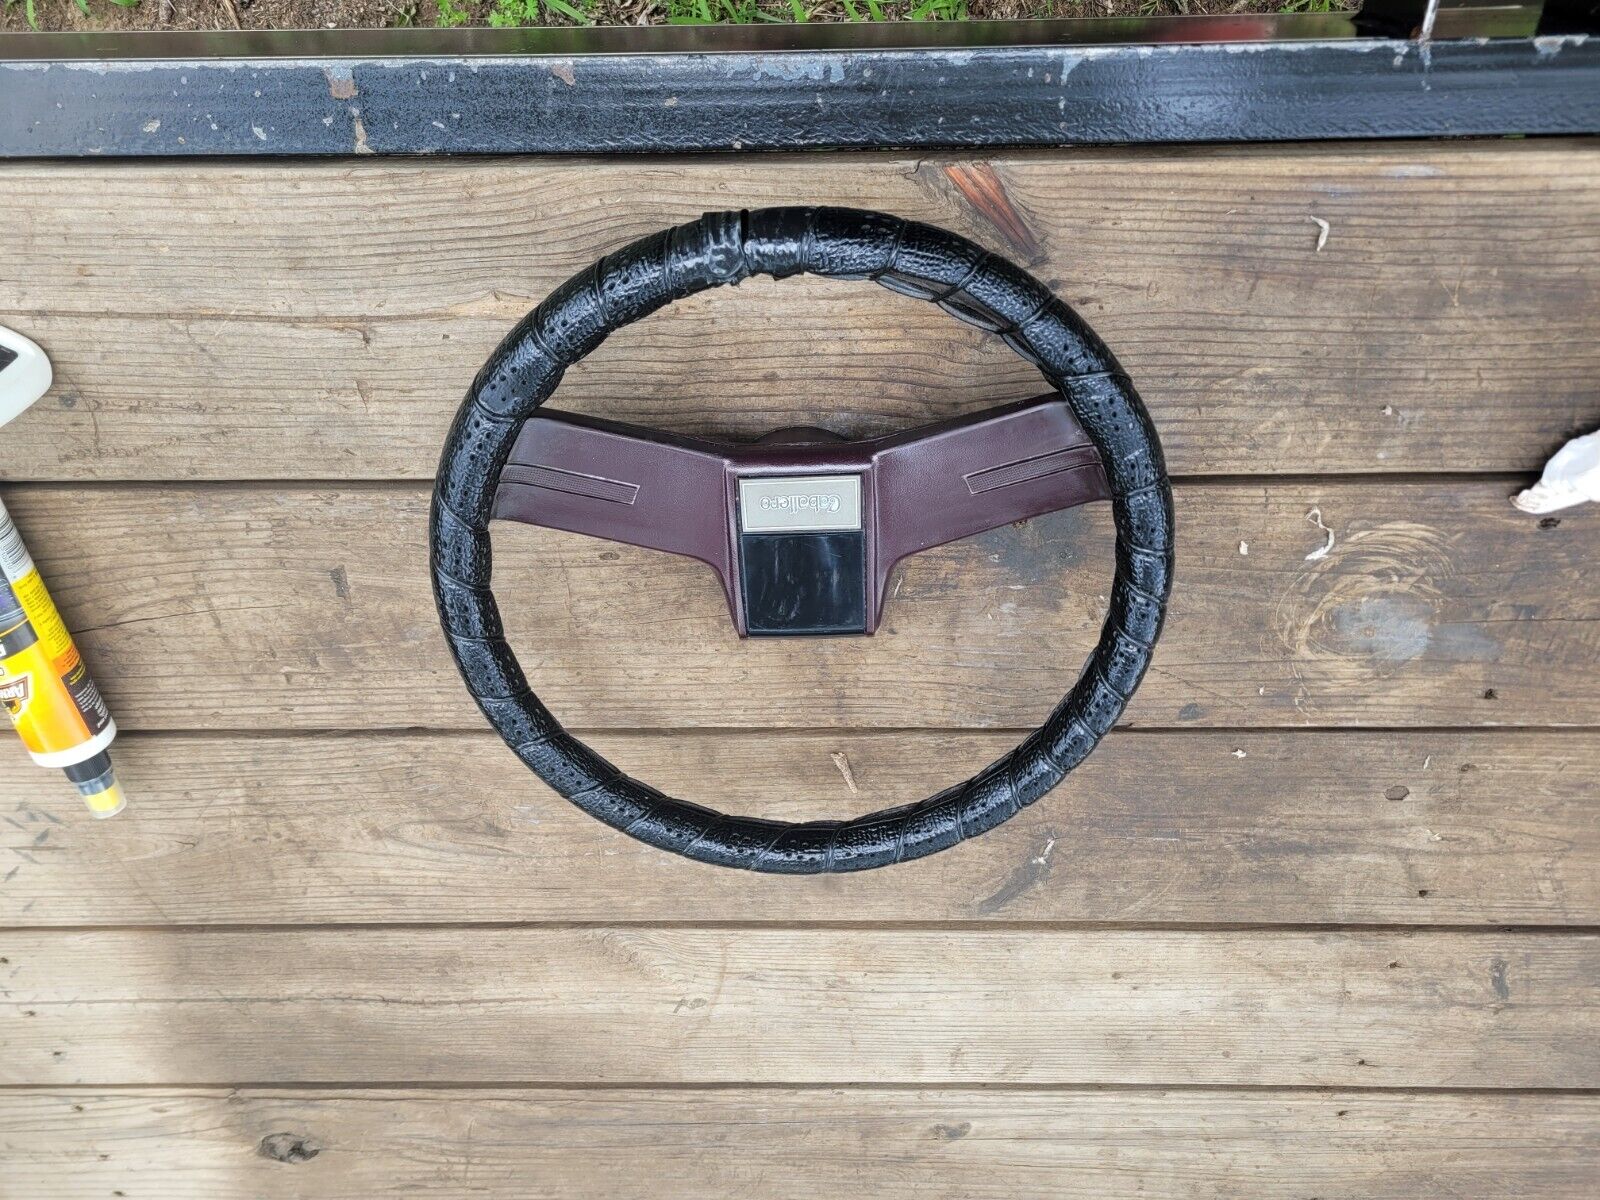 1986 Gmc Caballero steering wheel